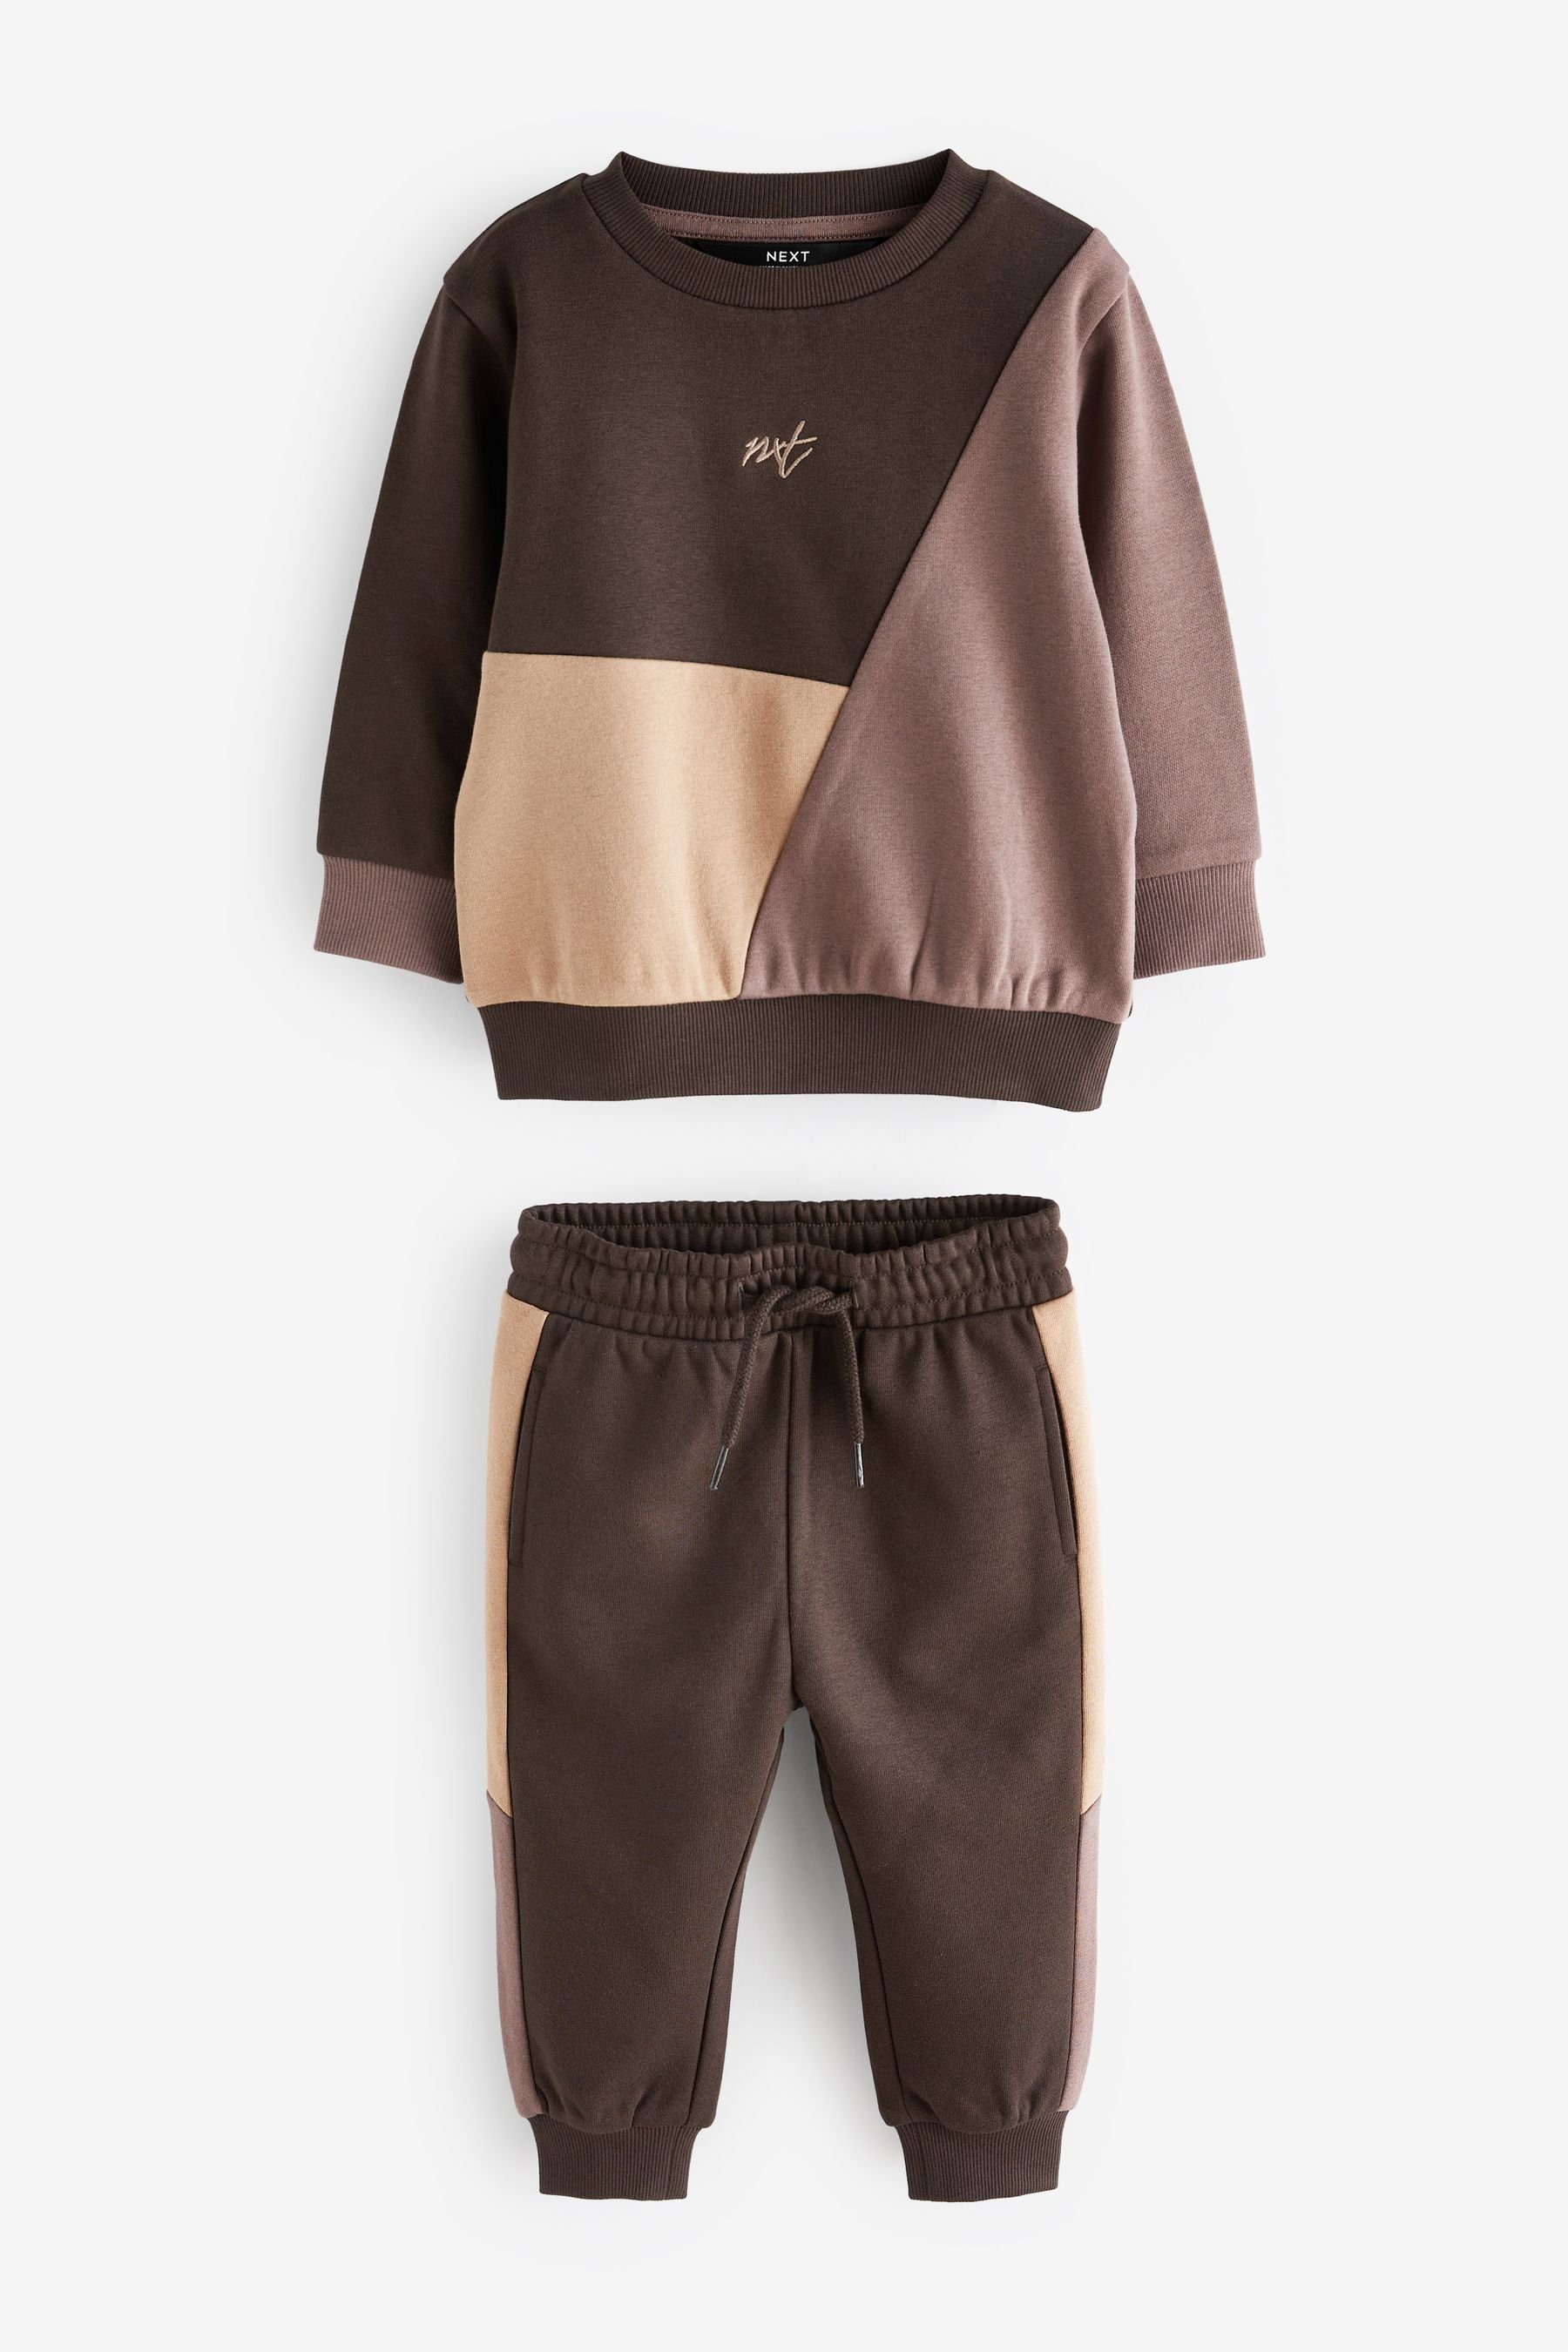 Next Sweatanzug Trainingsanzug mit Farbblockdesign (2-tlg) Chocolate Brown